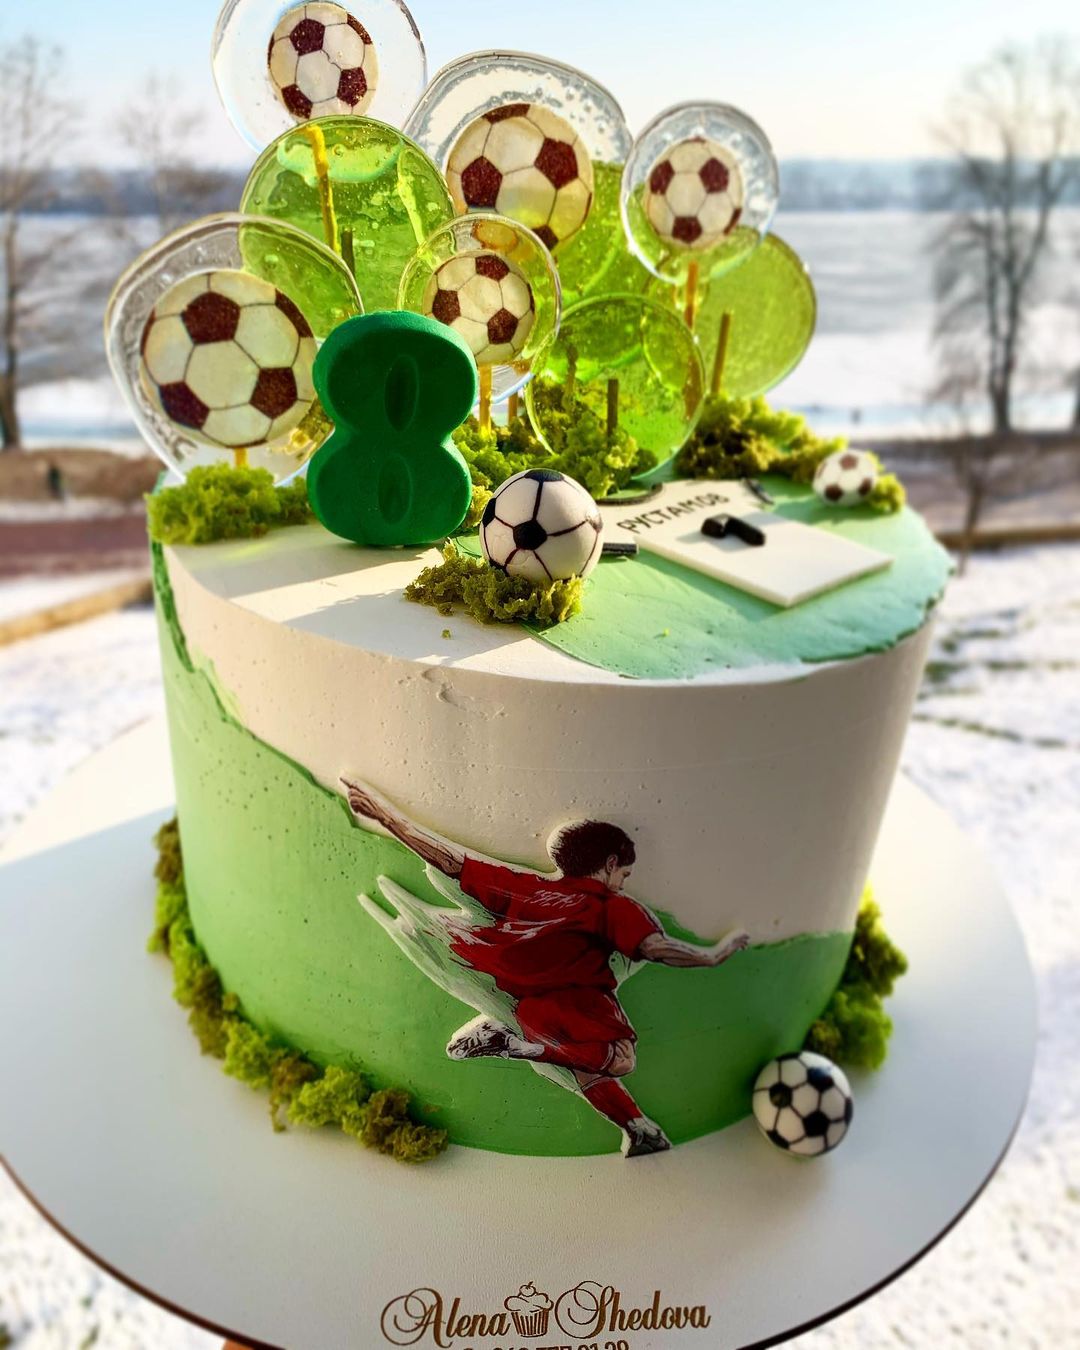 Торт "Футбол" | Фото №2